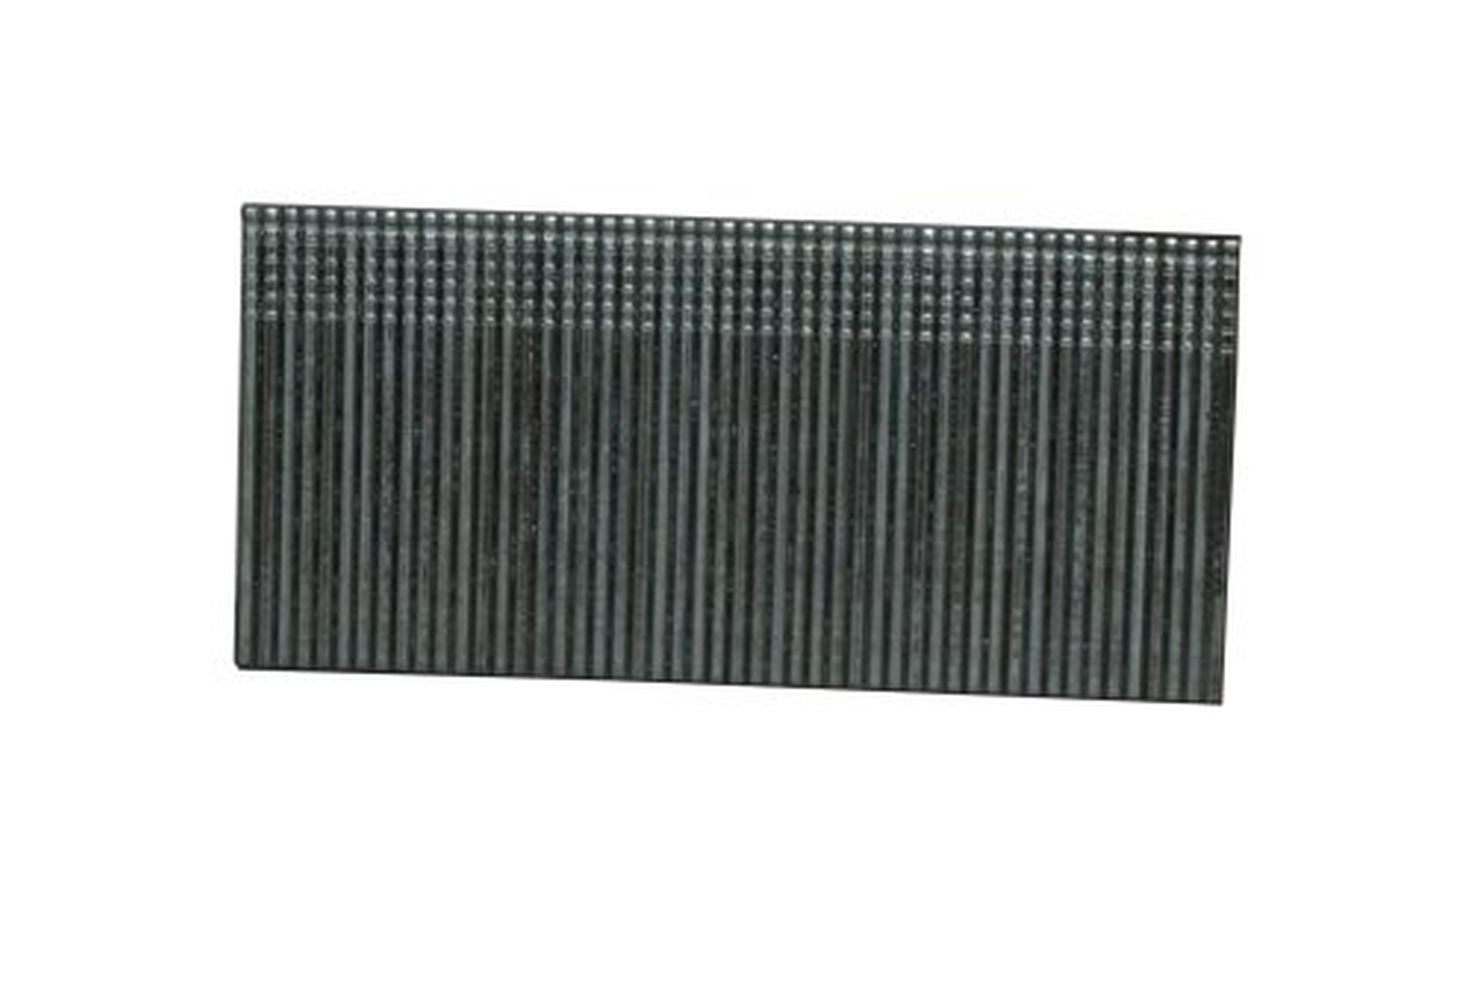 Foresto Galvanized Steel Finishing Nails - 16 Gauge - 2500 Per Pack - 1 3/4-in  L | Réno-Dépôt